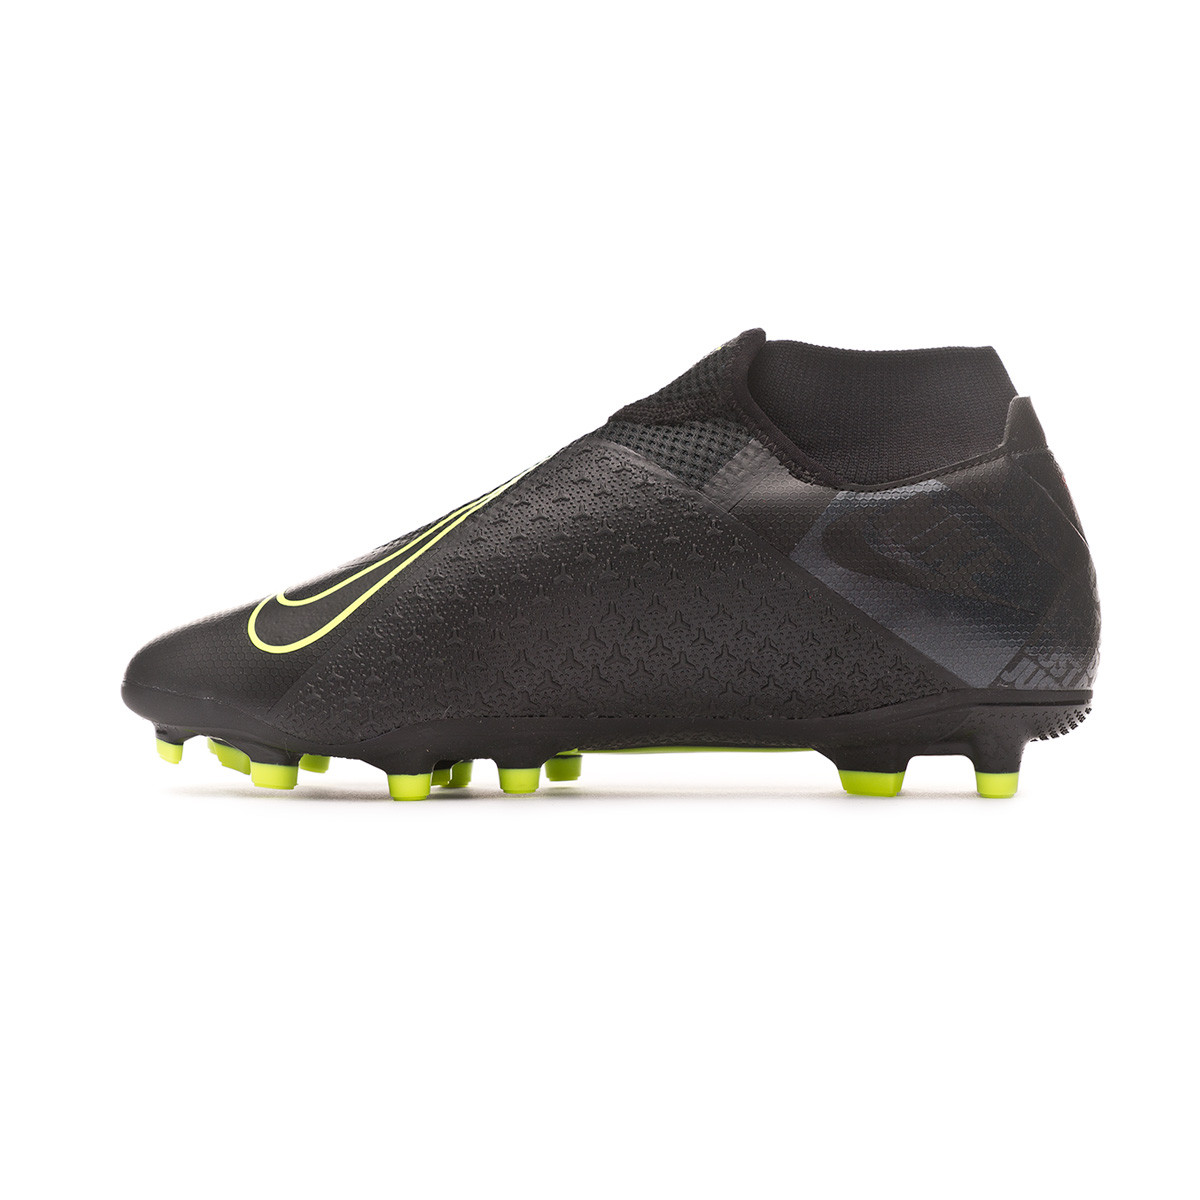 Renewal debut! A closer look at the Nike Phantom VSN 2 'Future Lab' football boots Daily .